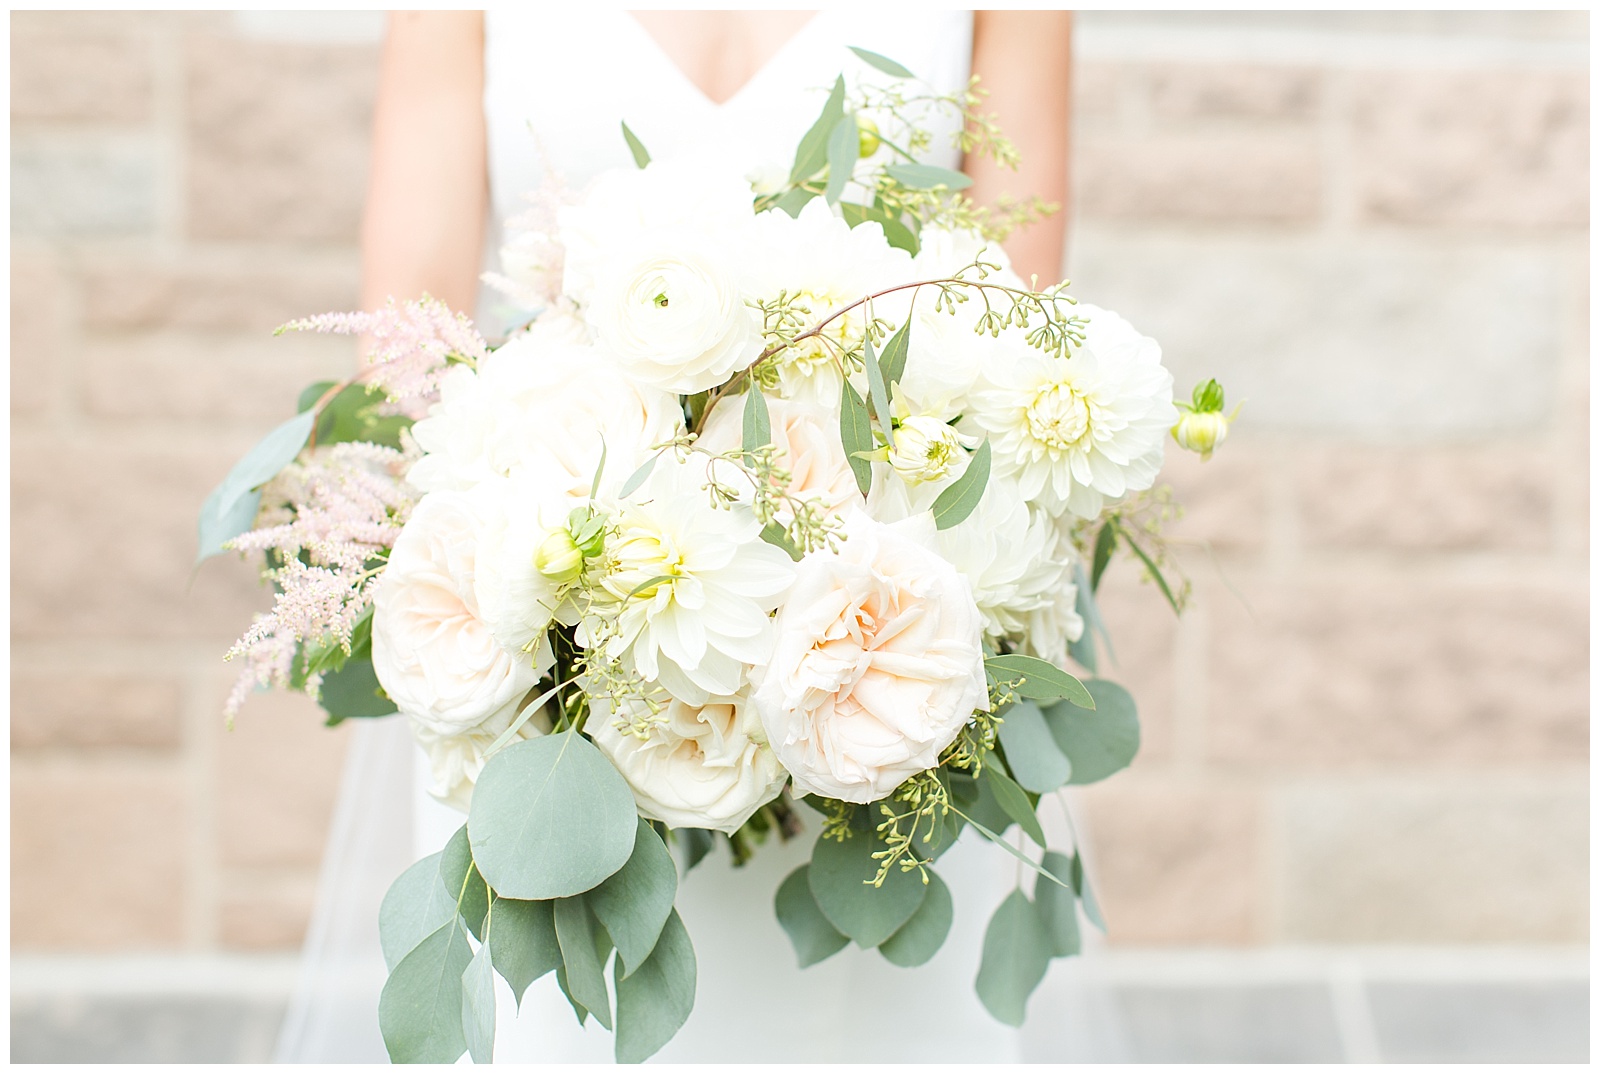 Lily Greenthumb's wedding flowers 